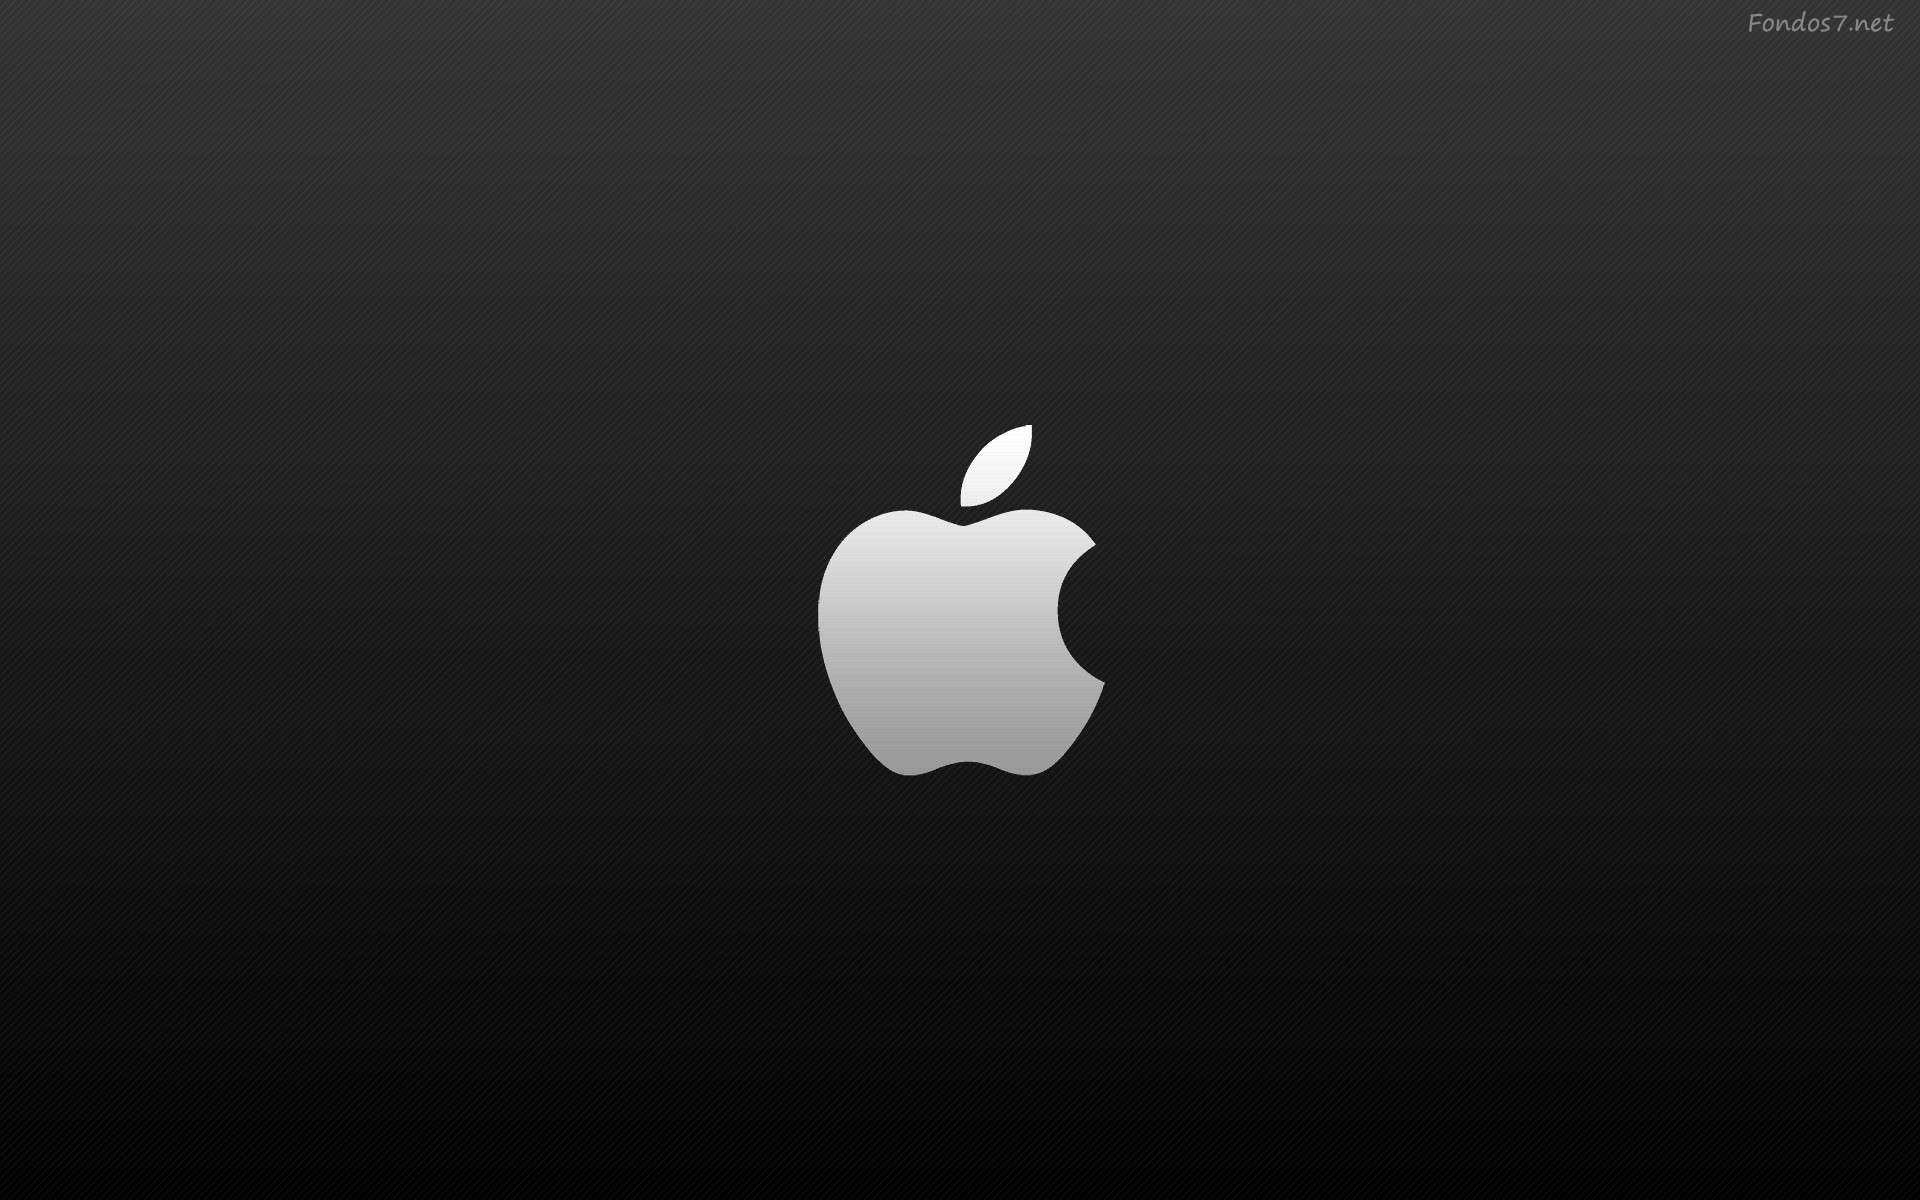 Mac Apple Logo Wallpaper Widescreen Fondos7